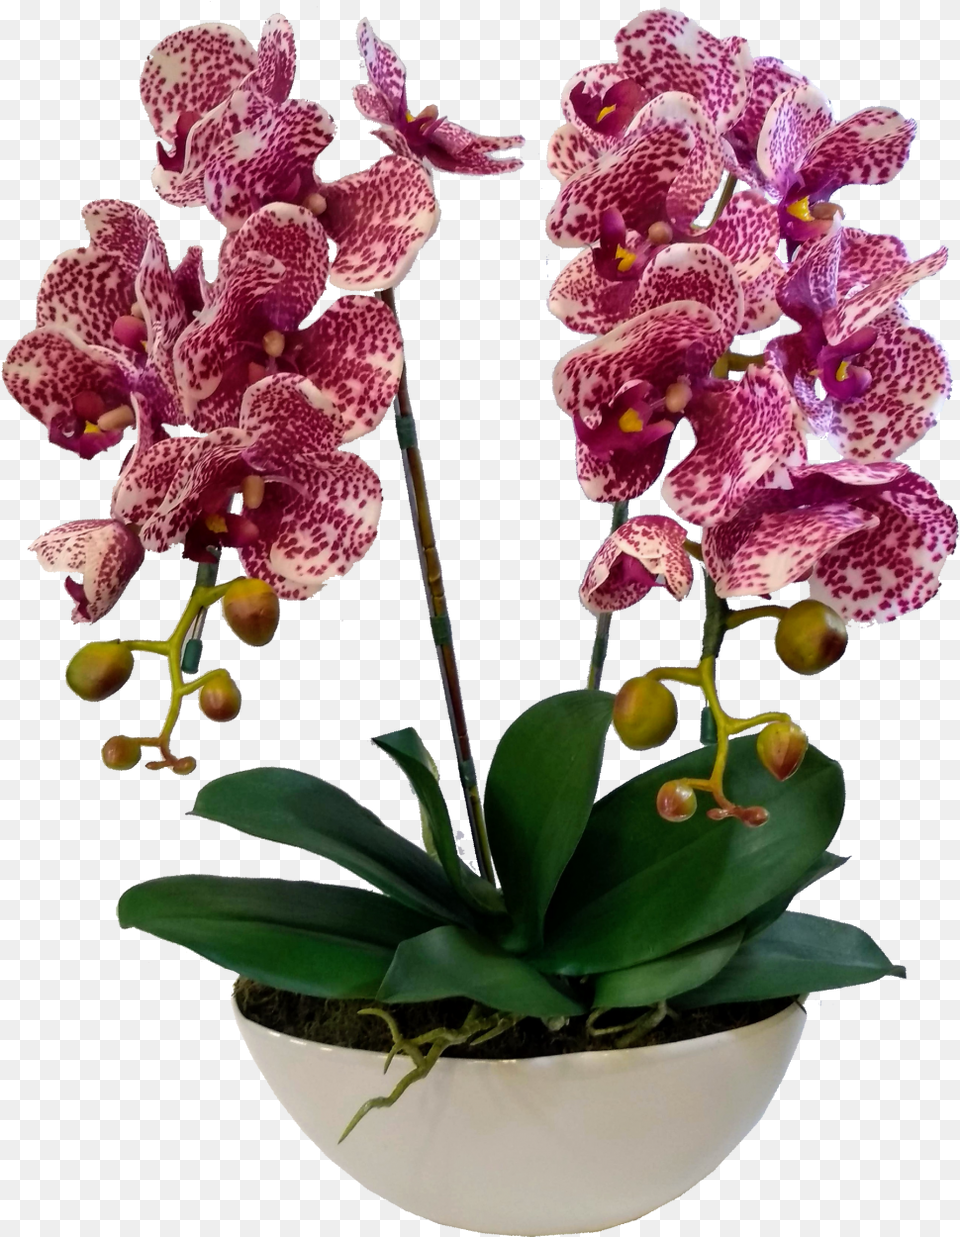 Orchids Of The Philippines, Flower, Orchid, Plant, Flower Arrangement Png